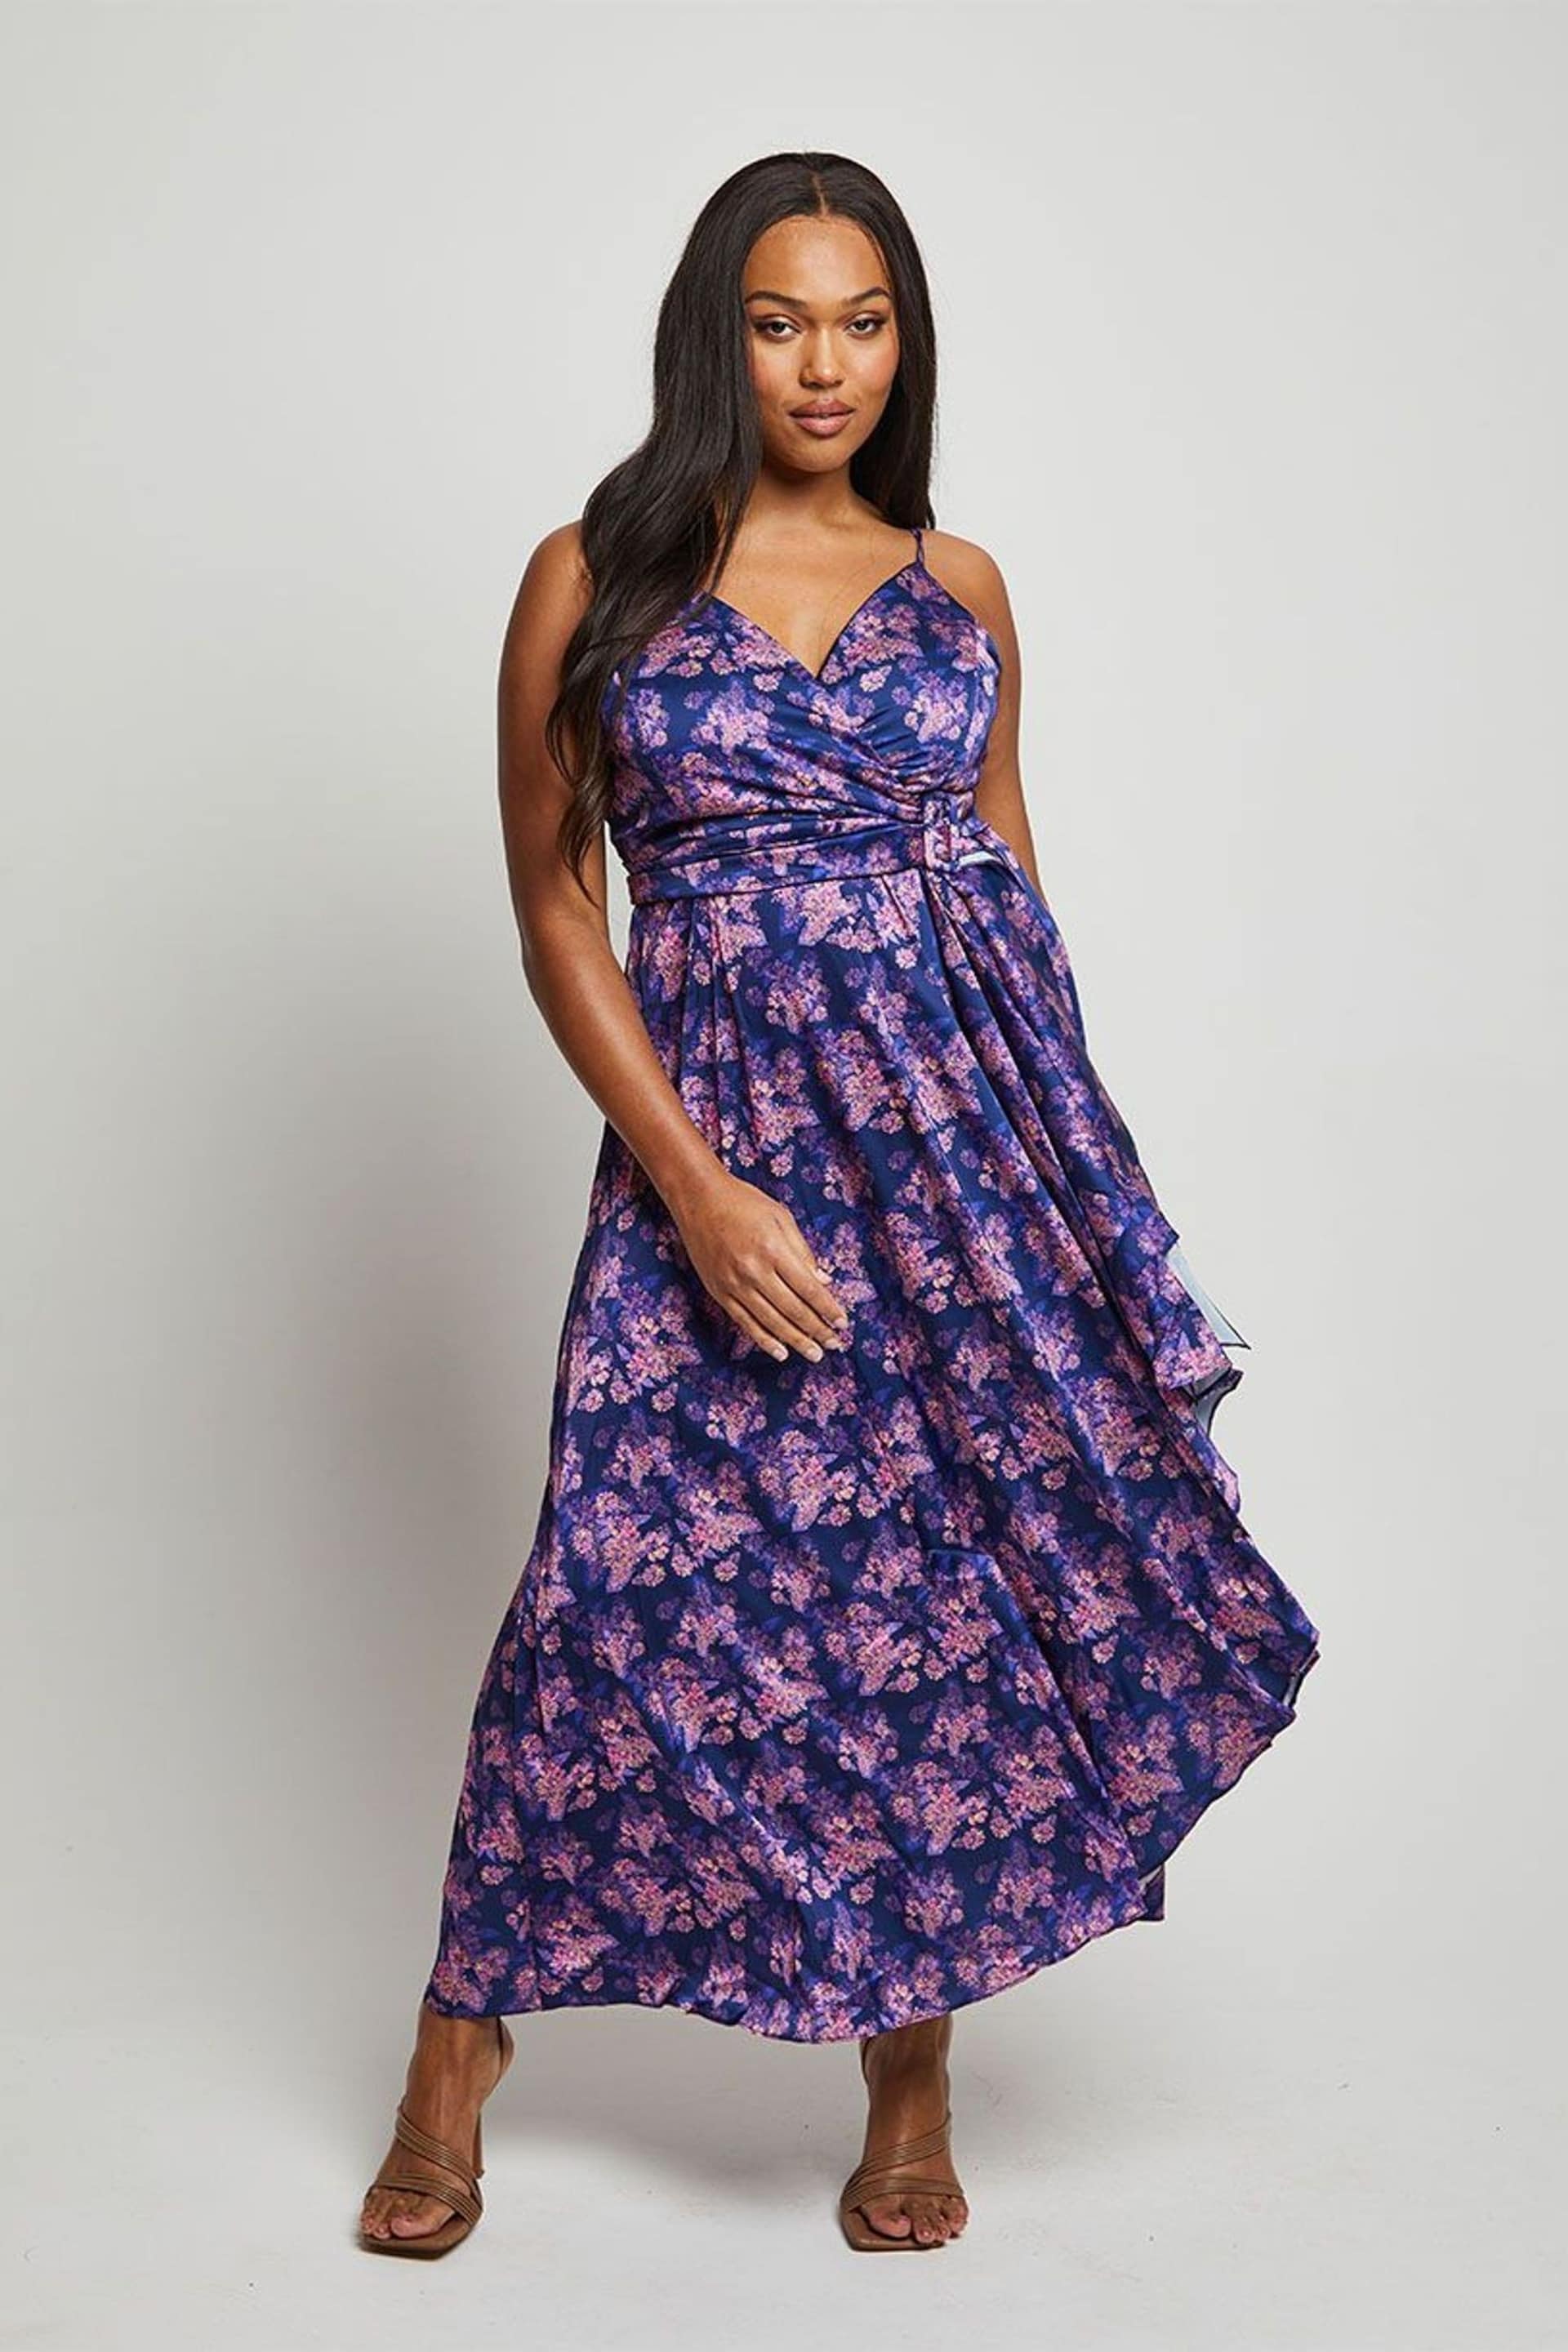 Chi Chi London Blue Cami Floral Print Wrap Midi Dress - Image 1 of 4